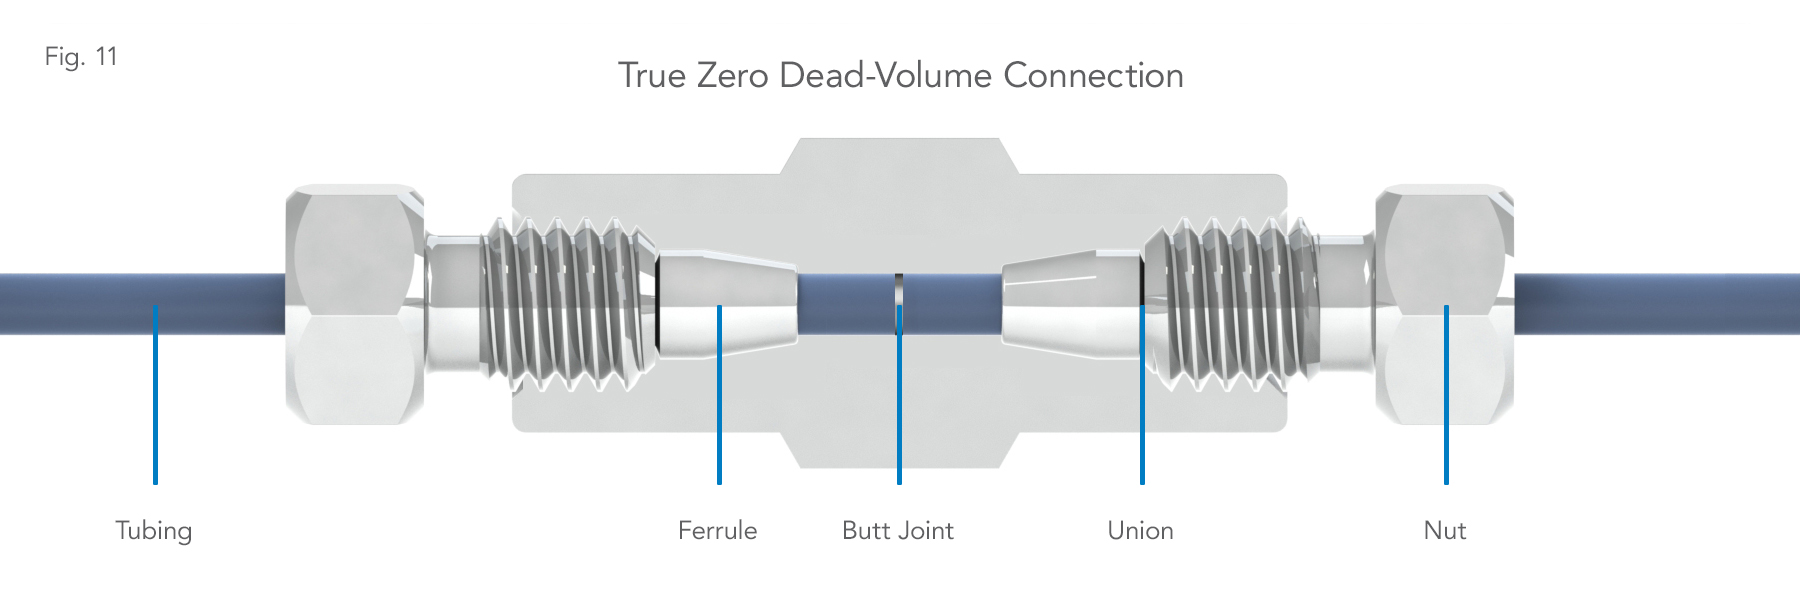 True zero dead-volume connection illustration